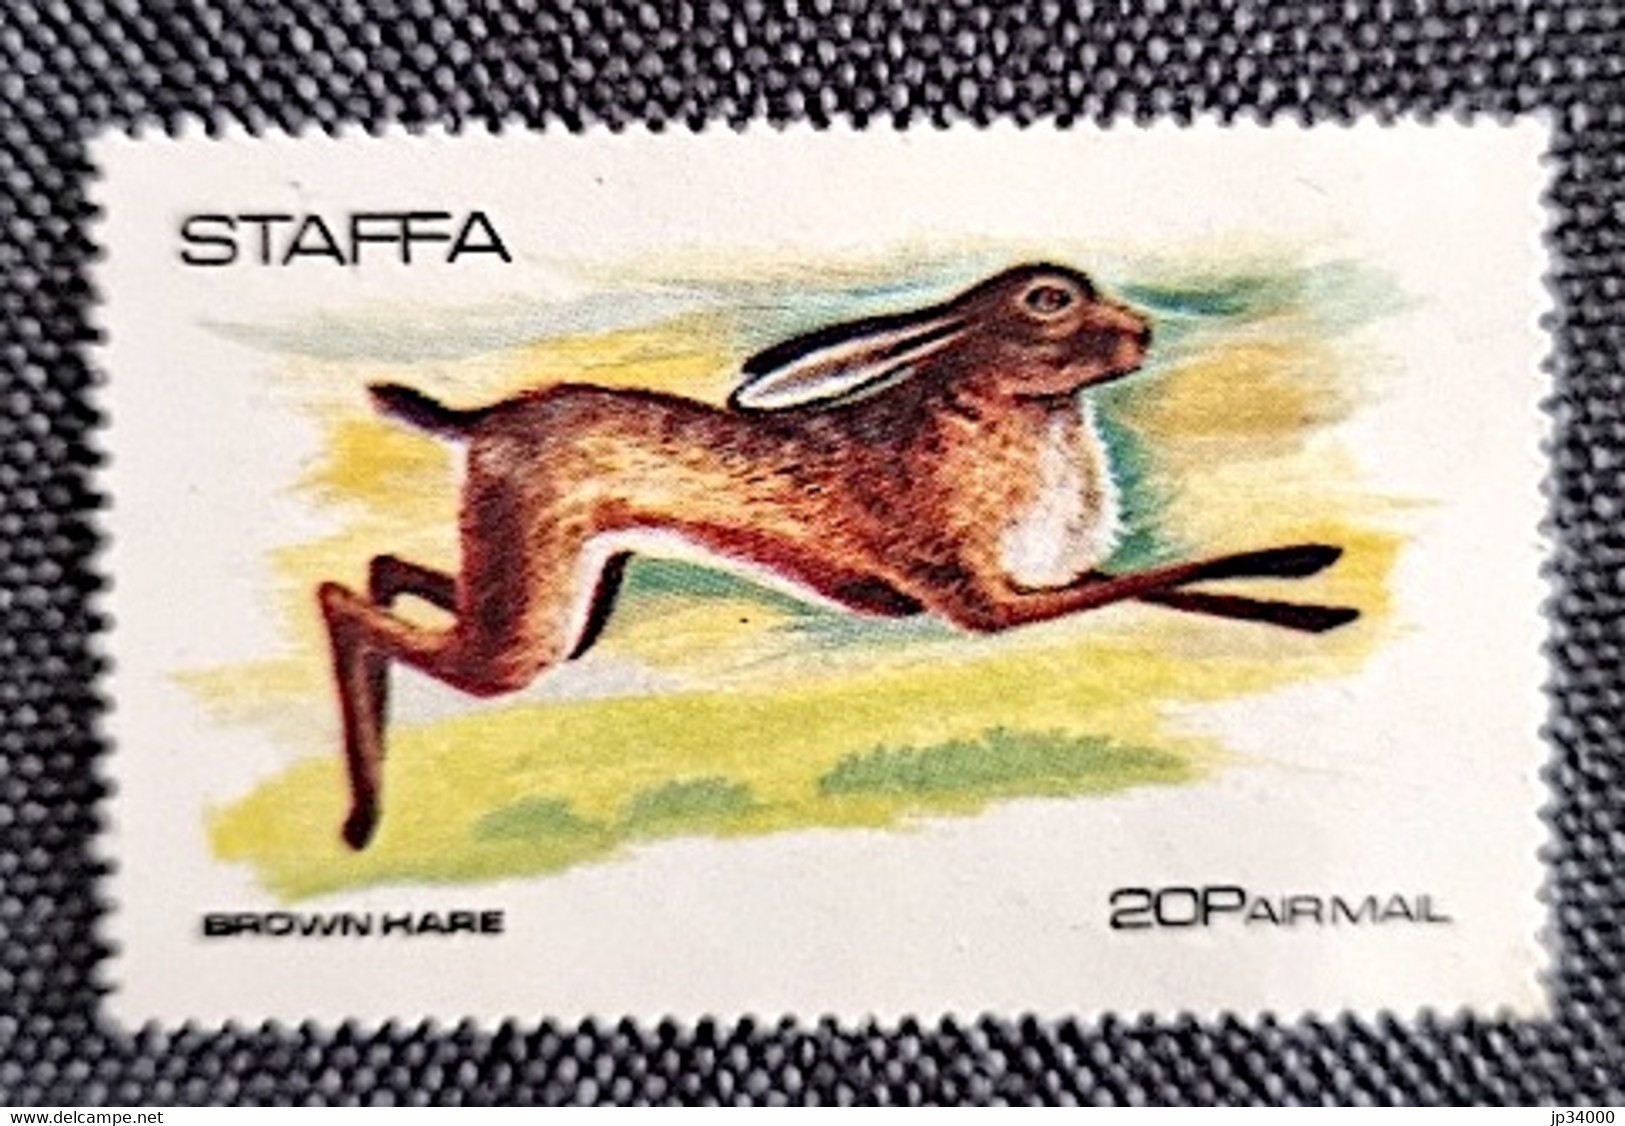 STAFFA Lapins, Lapin, Rabbit, Conejo. (1 Valeur Dentelée.) ** Neuf Sans Charnière - Conigli